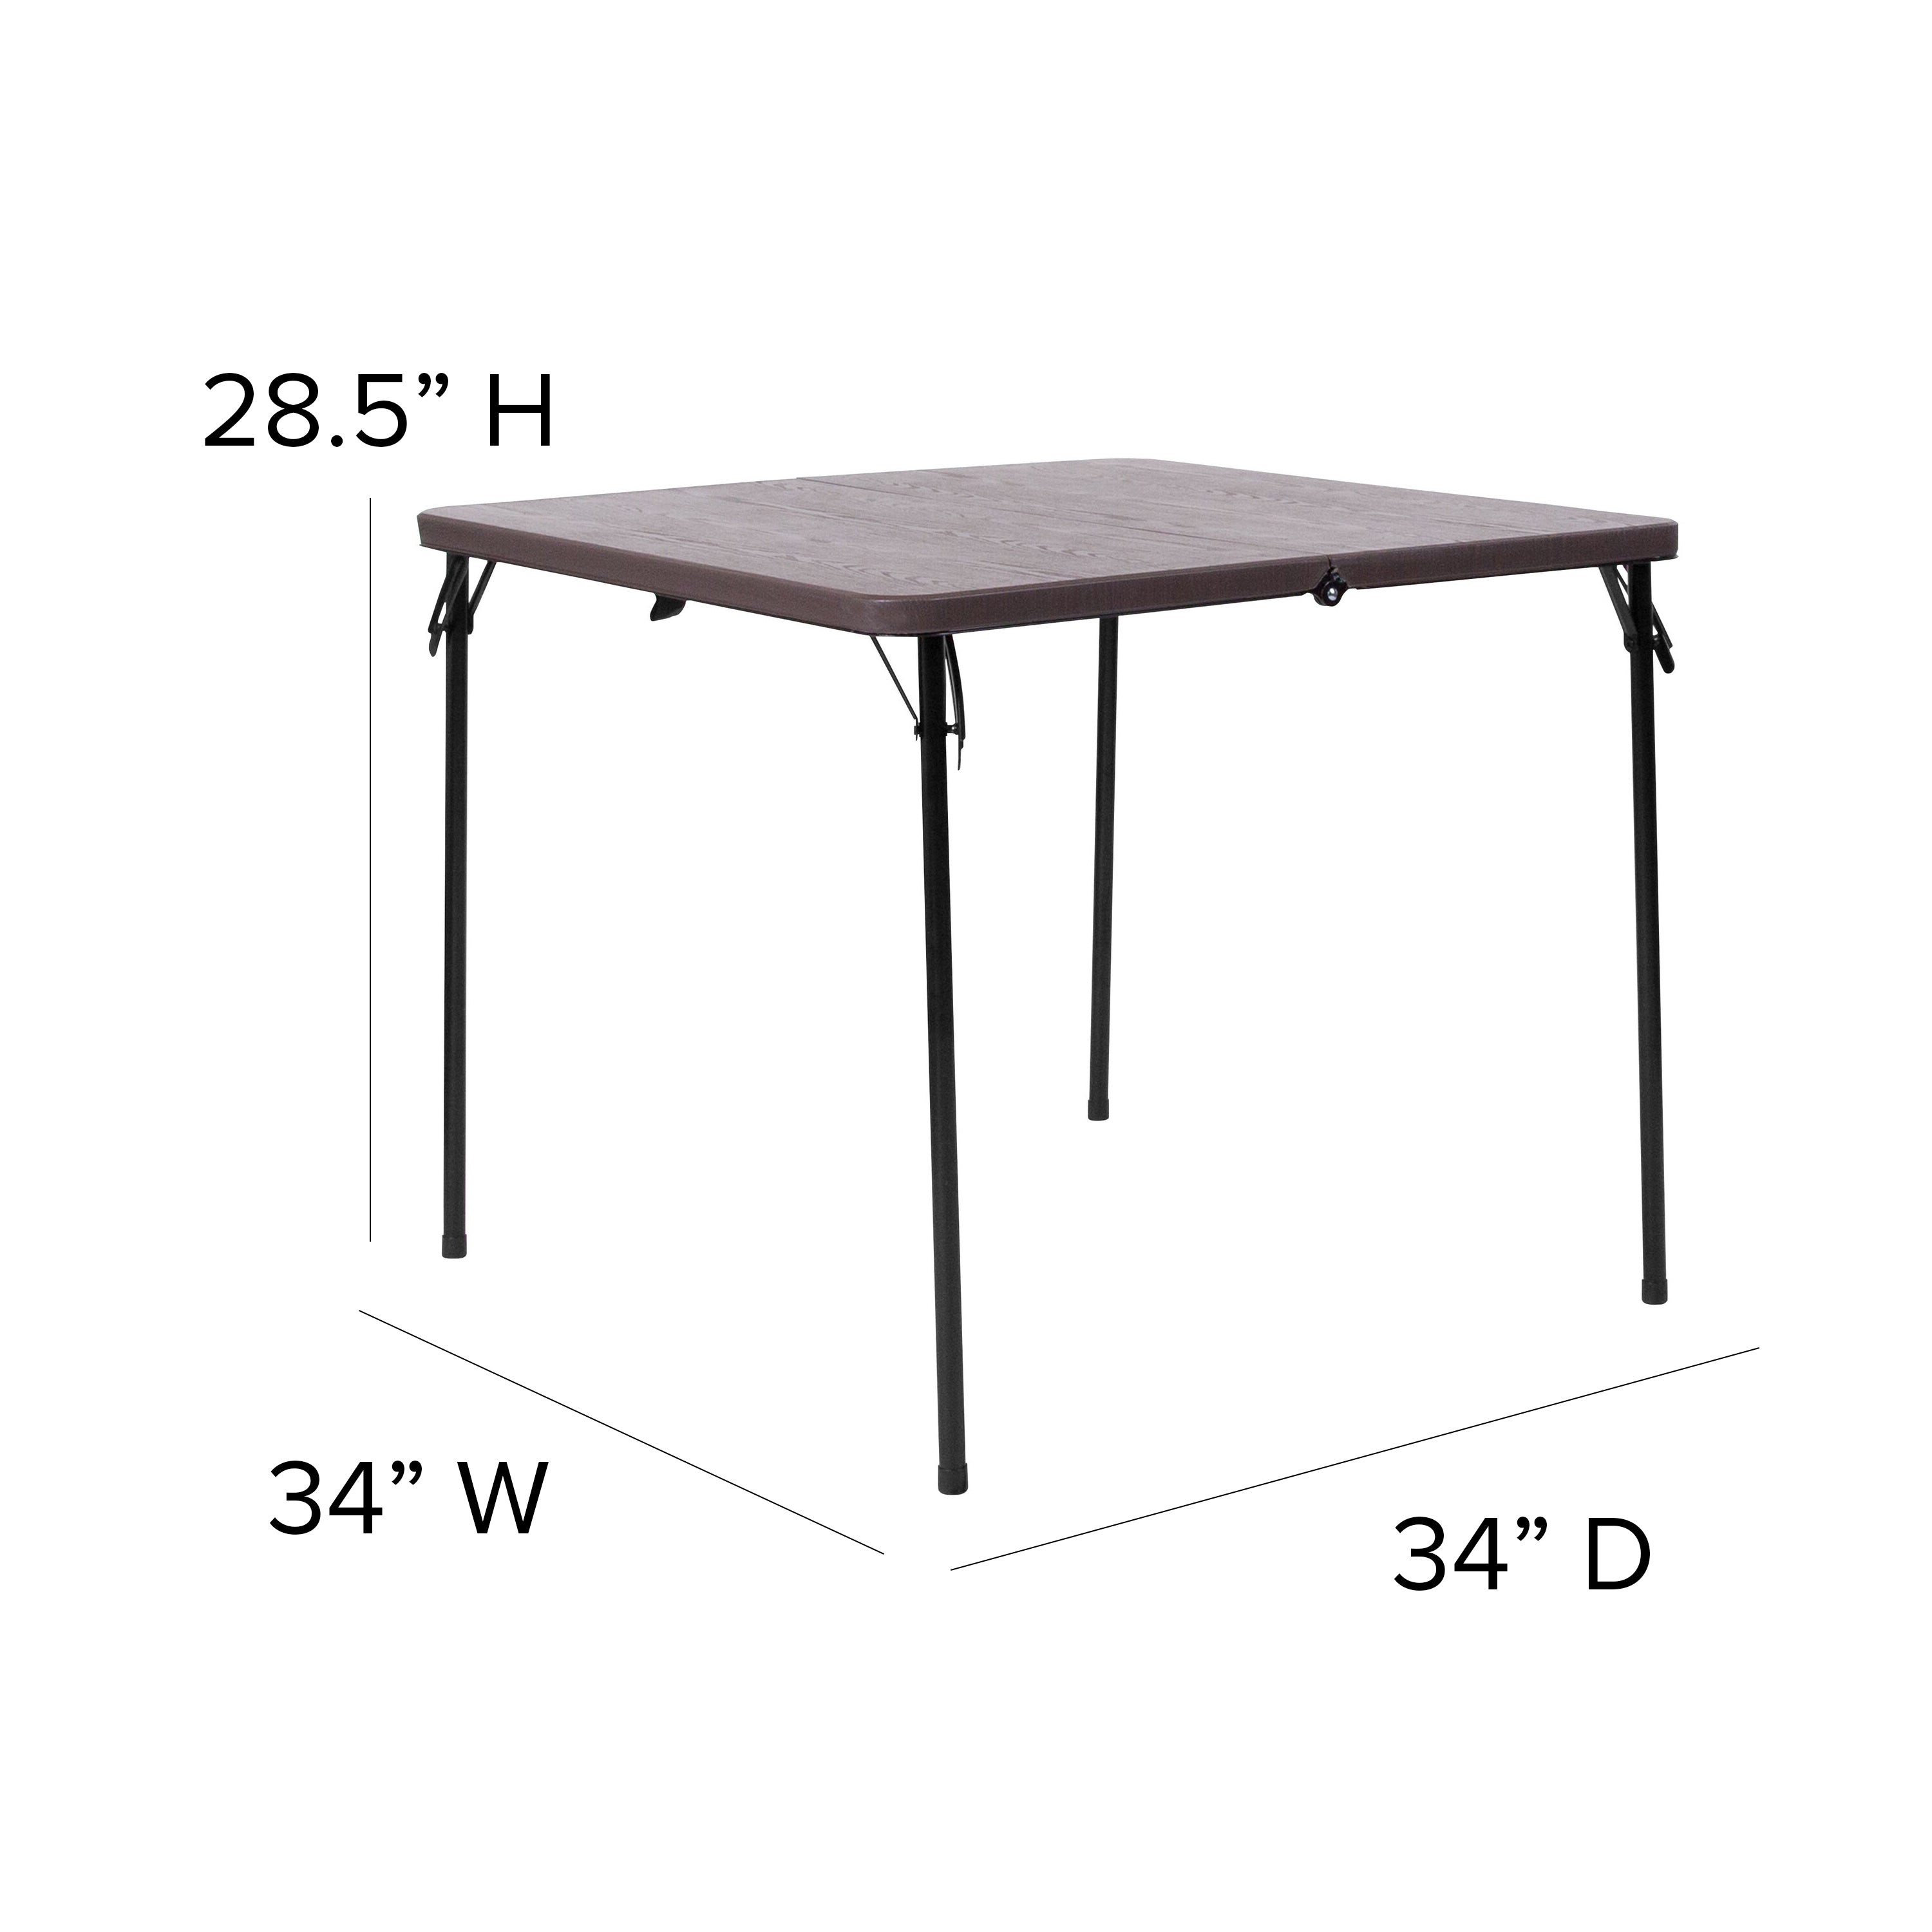 2.83-Foot Square Bi-Fold Plastic Folding Table with Carrying Handle-Square Plastic Folding Table-Flash Furniture-Wall2Wall Furnishings